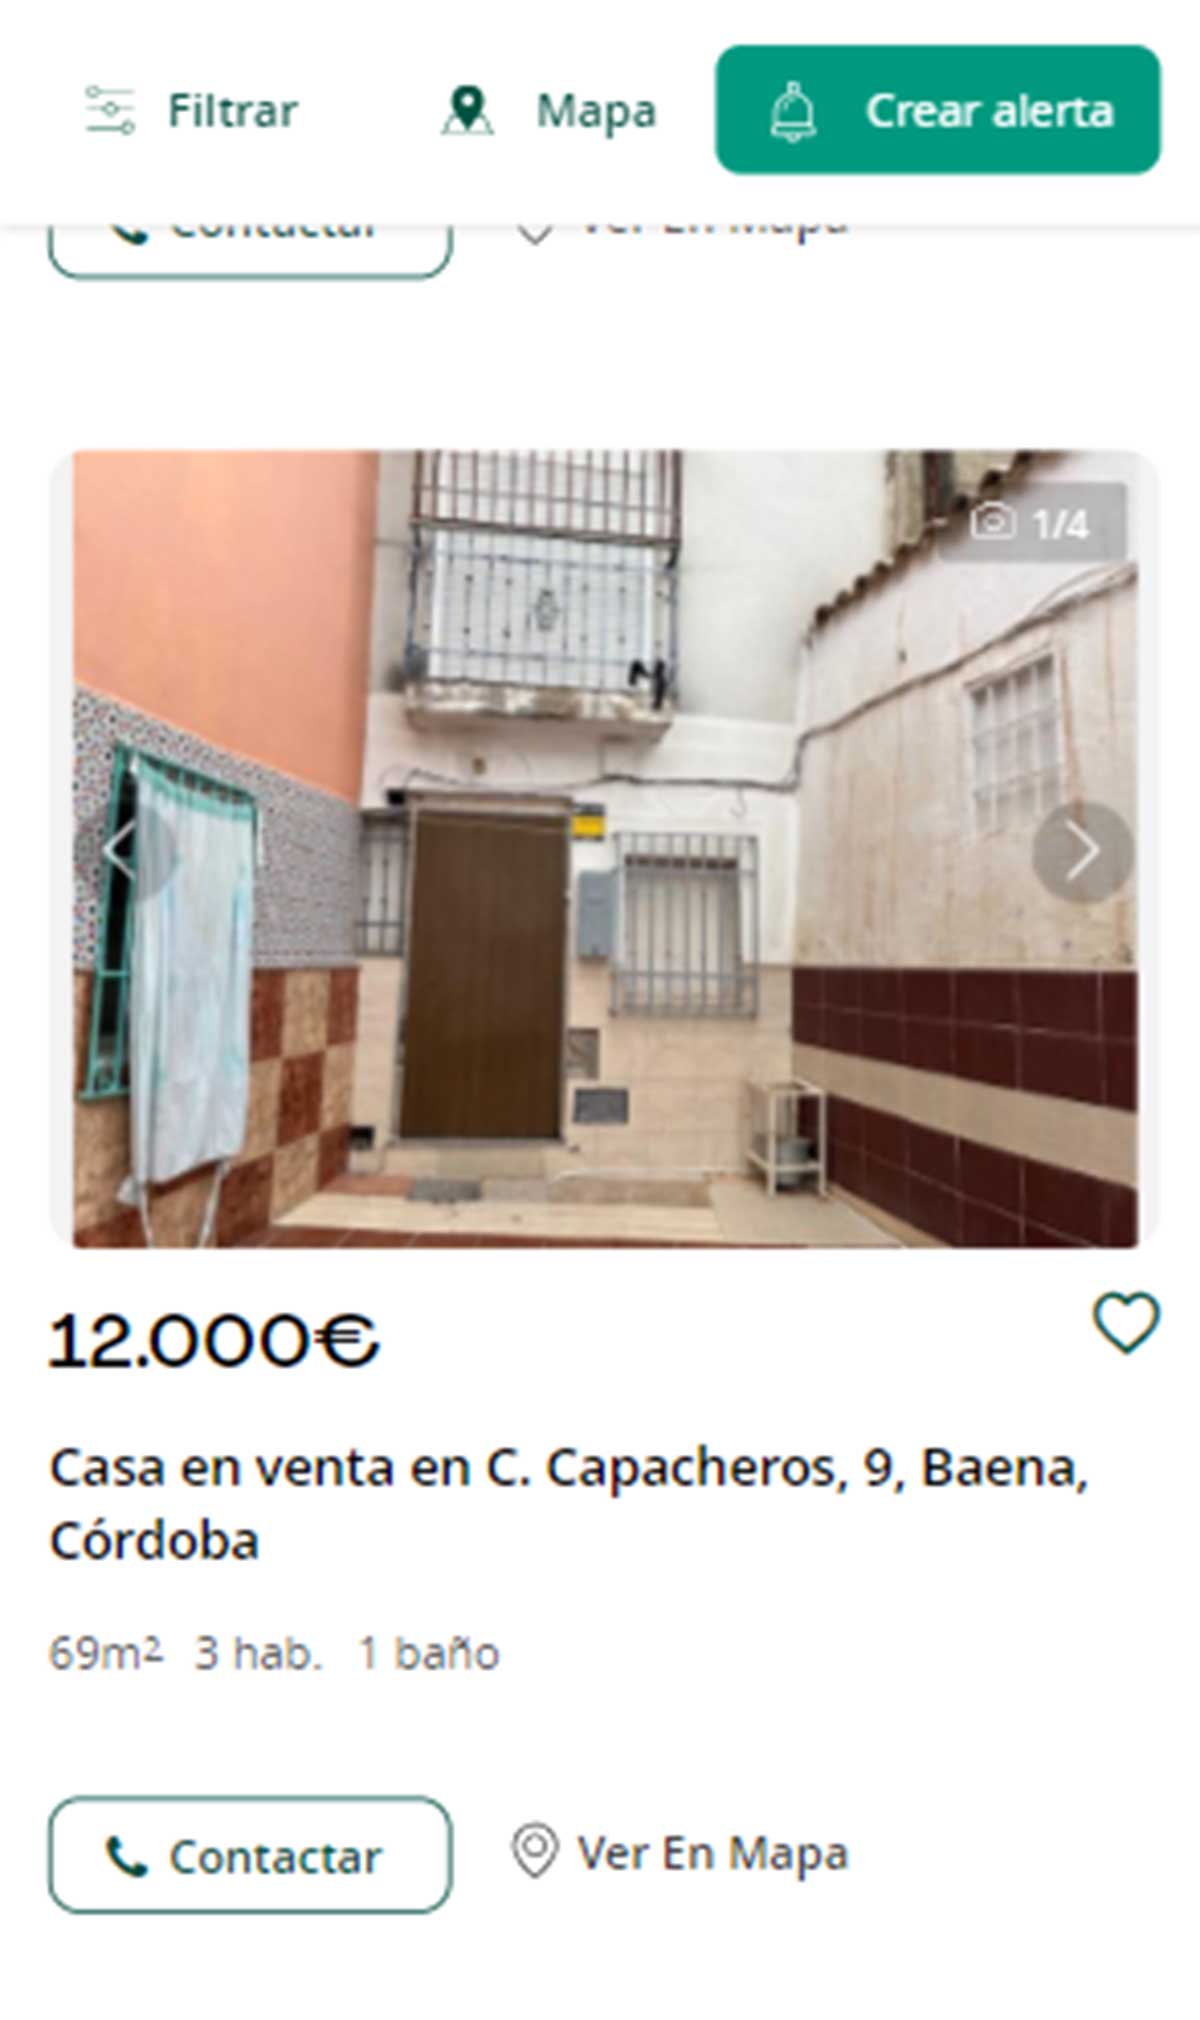 Piso a la venta en Córdoba por 12.000 euros